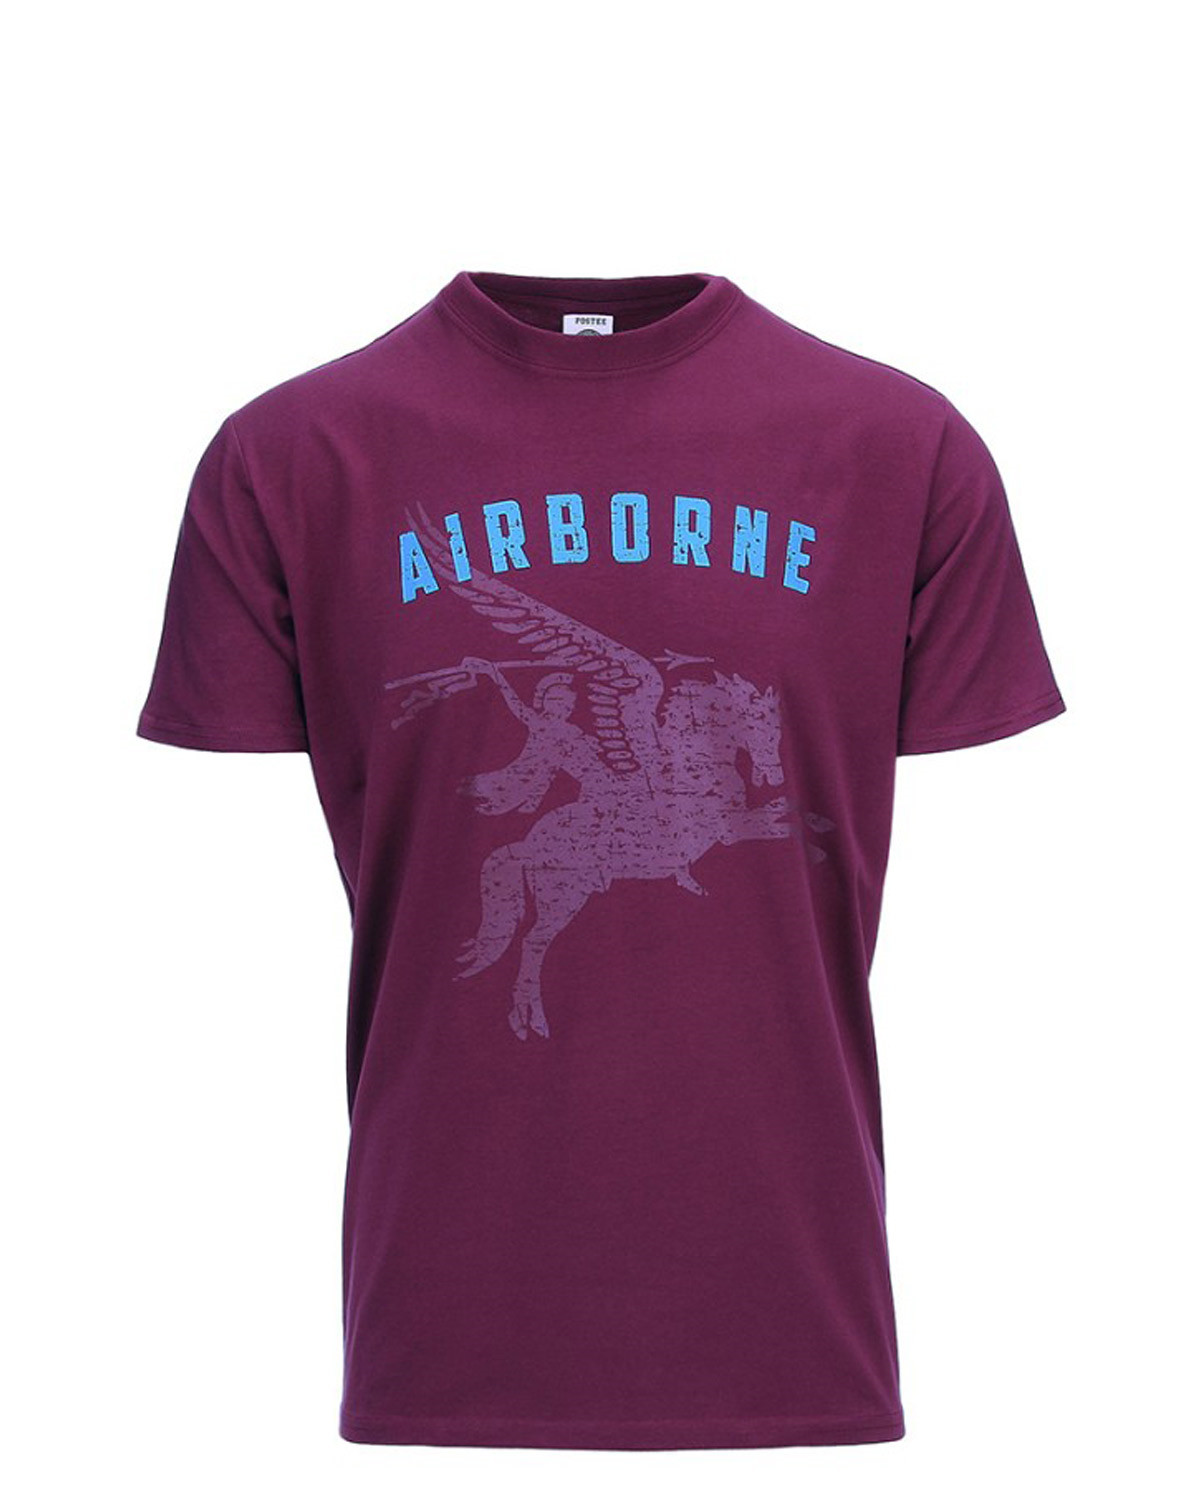 Fostex T-shirt Airborne Pegasus (Maroon, L)